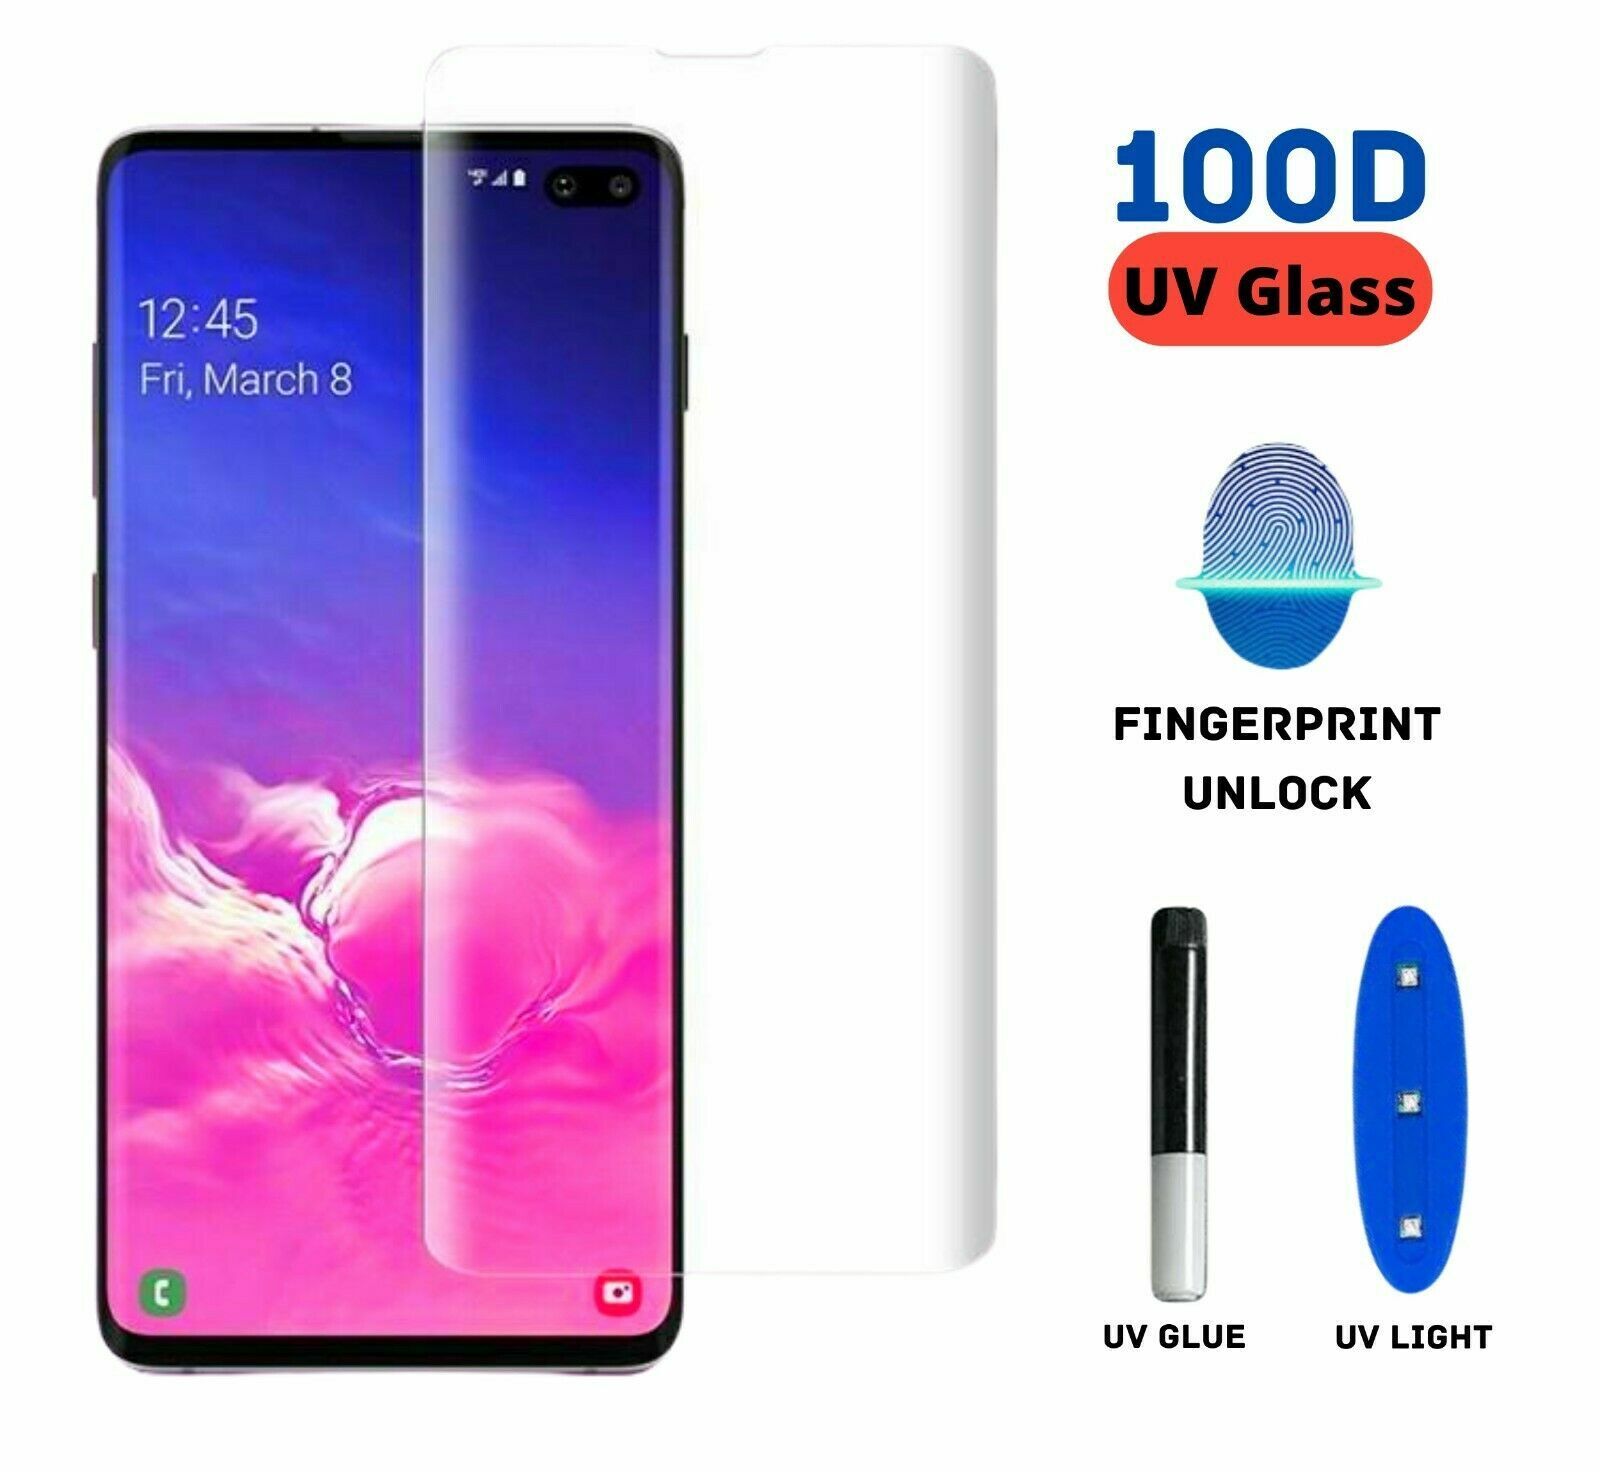 Facturable Geología ecuación Full Glue UV Light Tempered Glass Screen Protector Samsung S8 S8+ S9 S9+  Note 10 | eBay